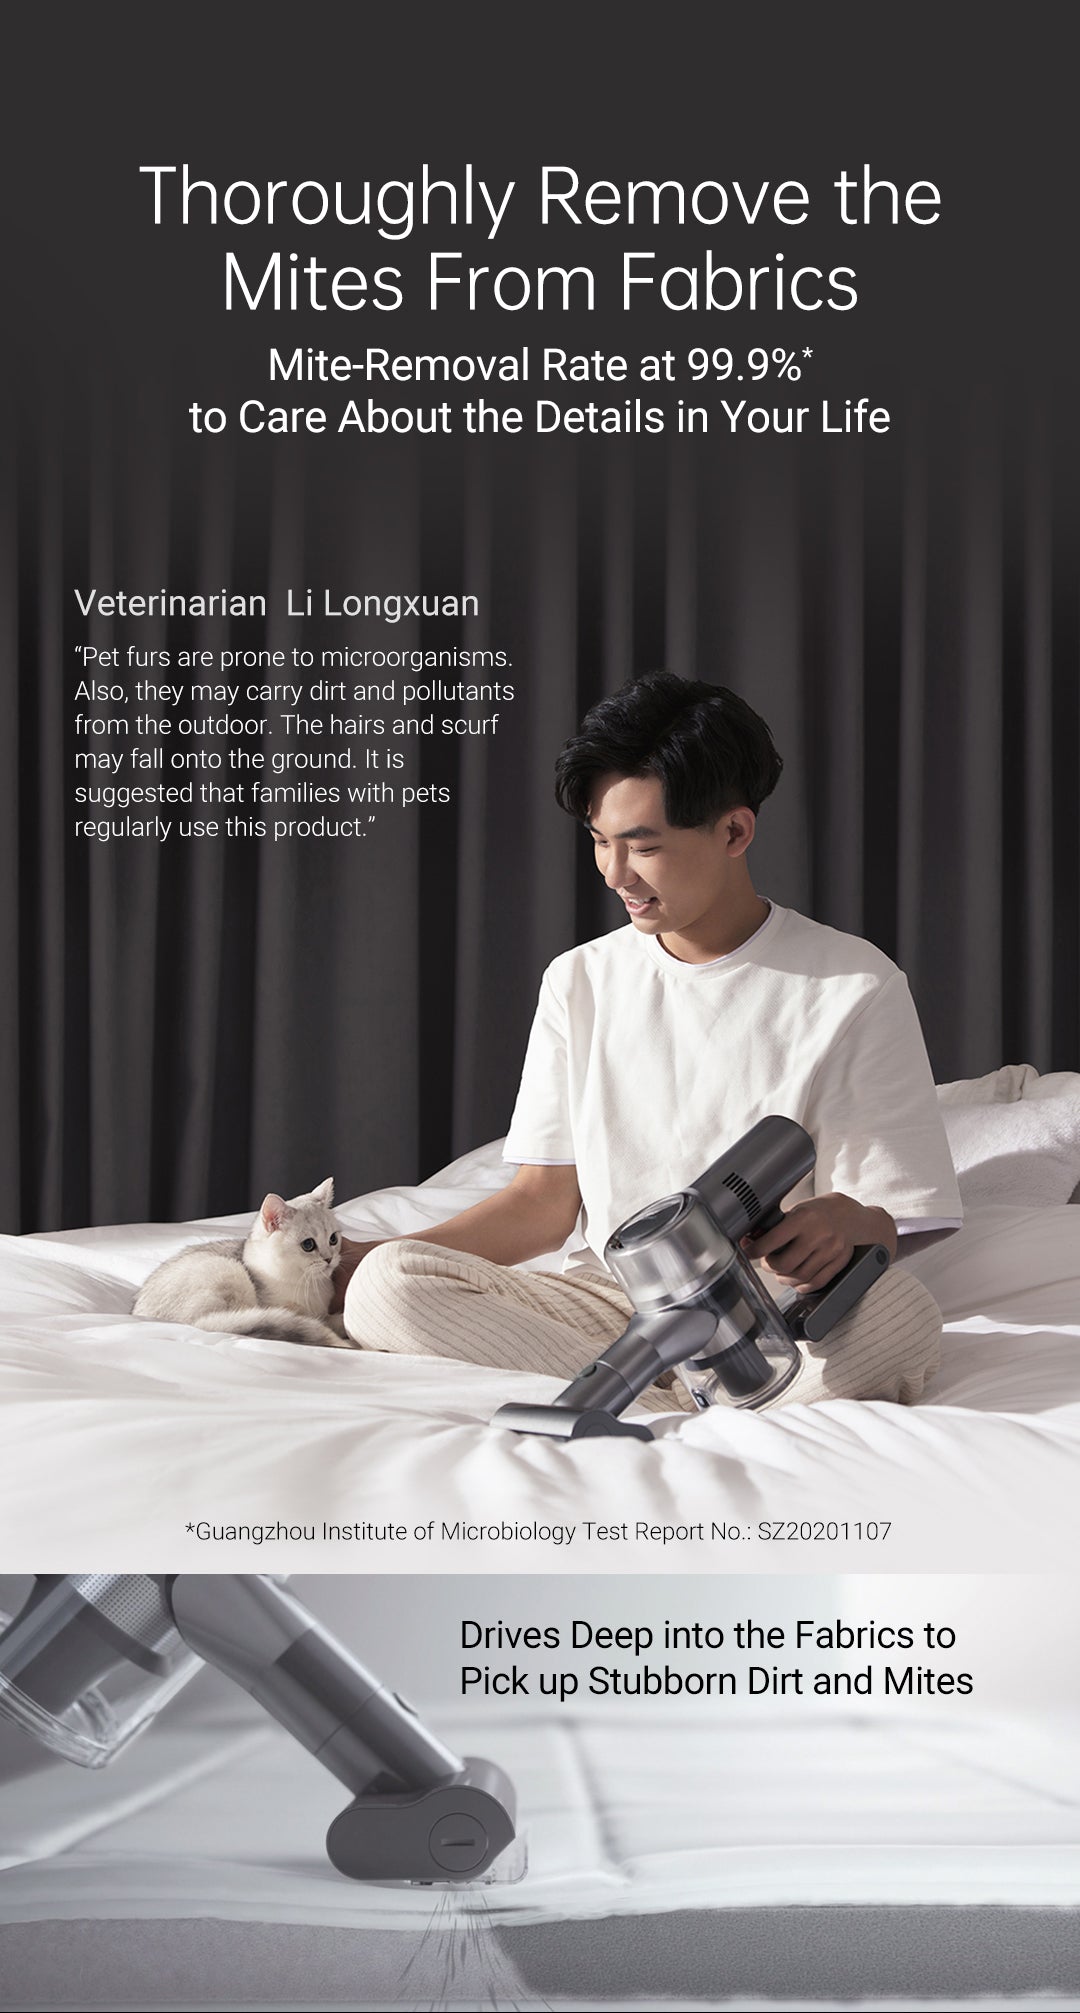 Dreame V11 Cordless Vacuum Cleaner